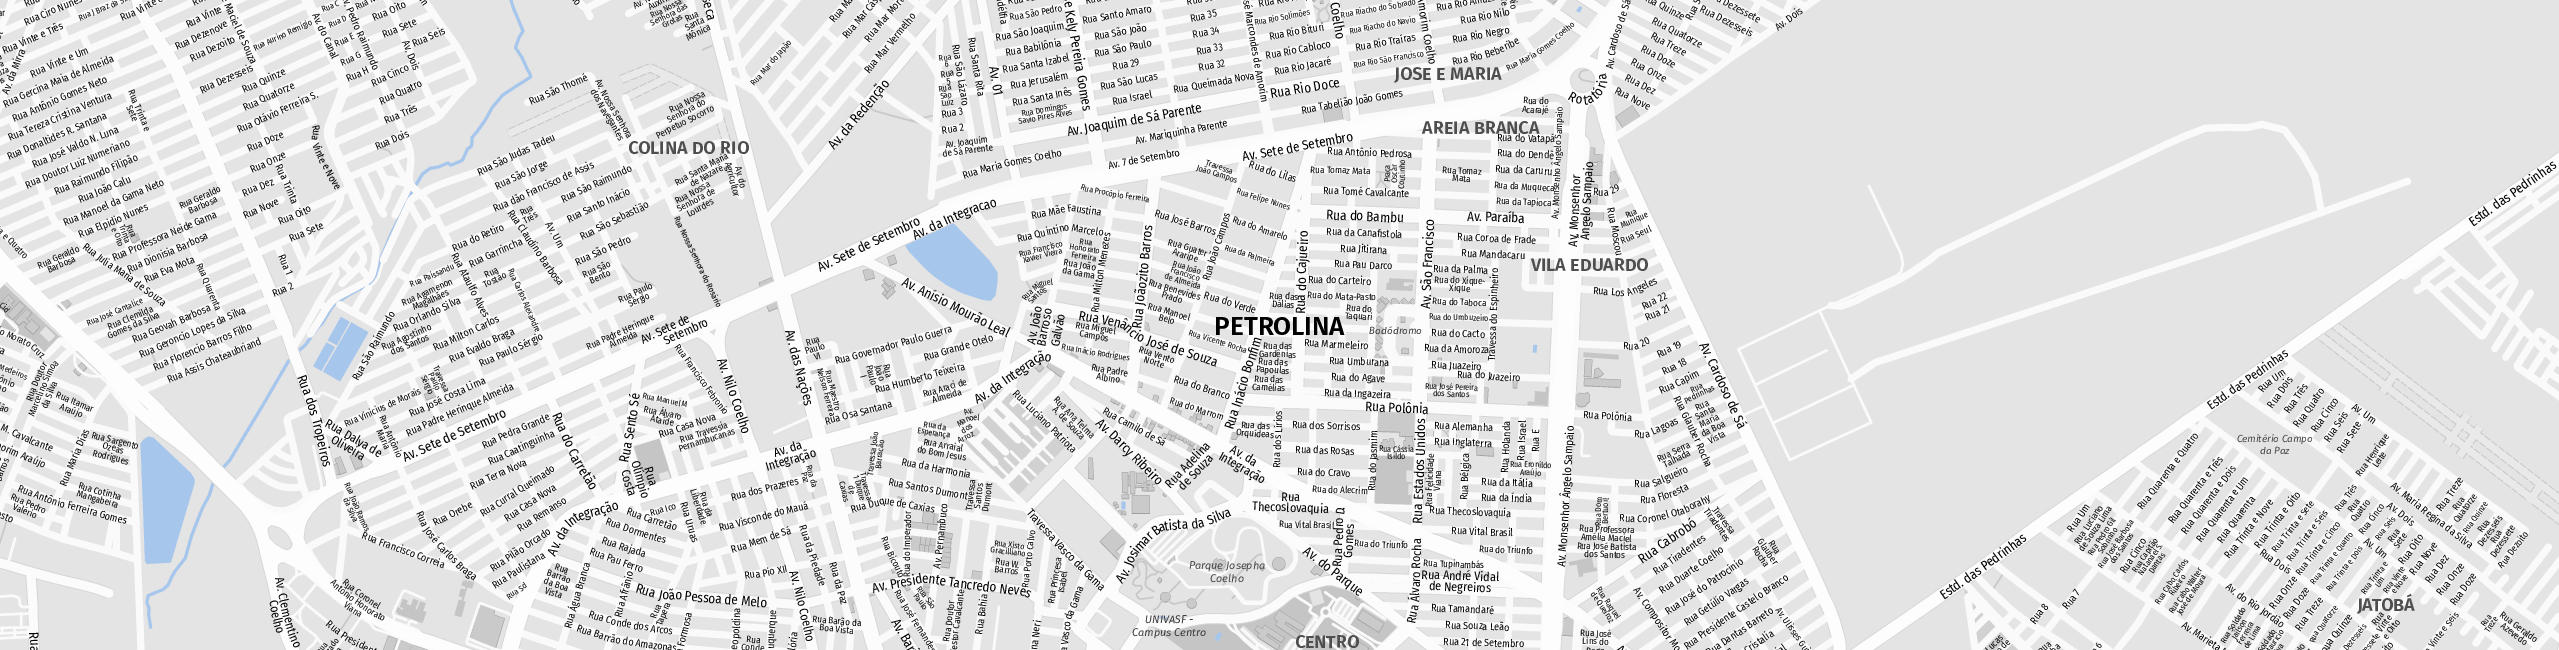 Stadtplan Petrolina zum Downloaden.